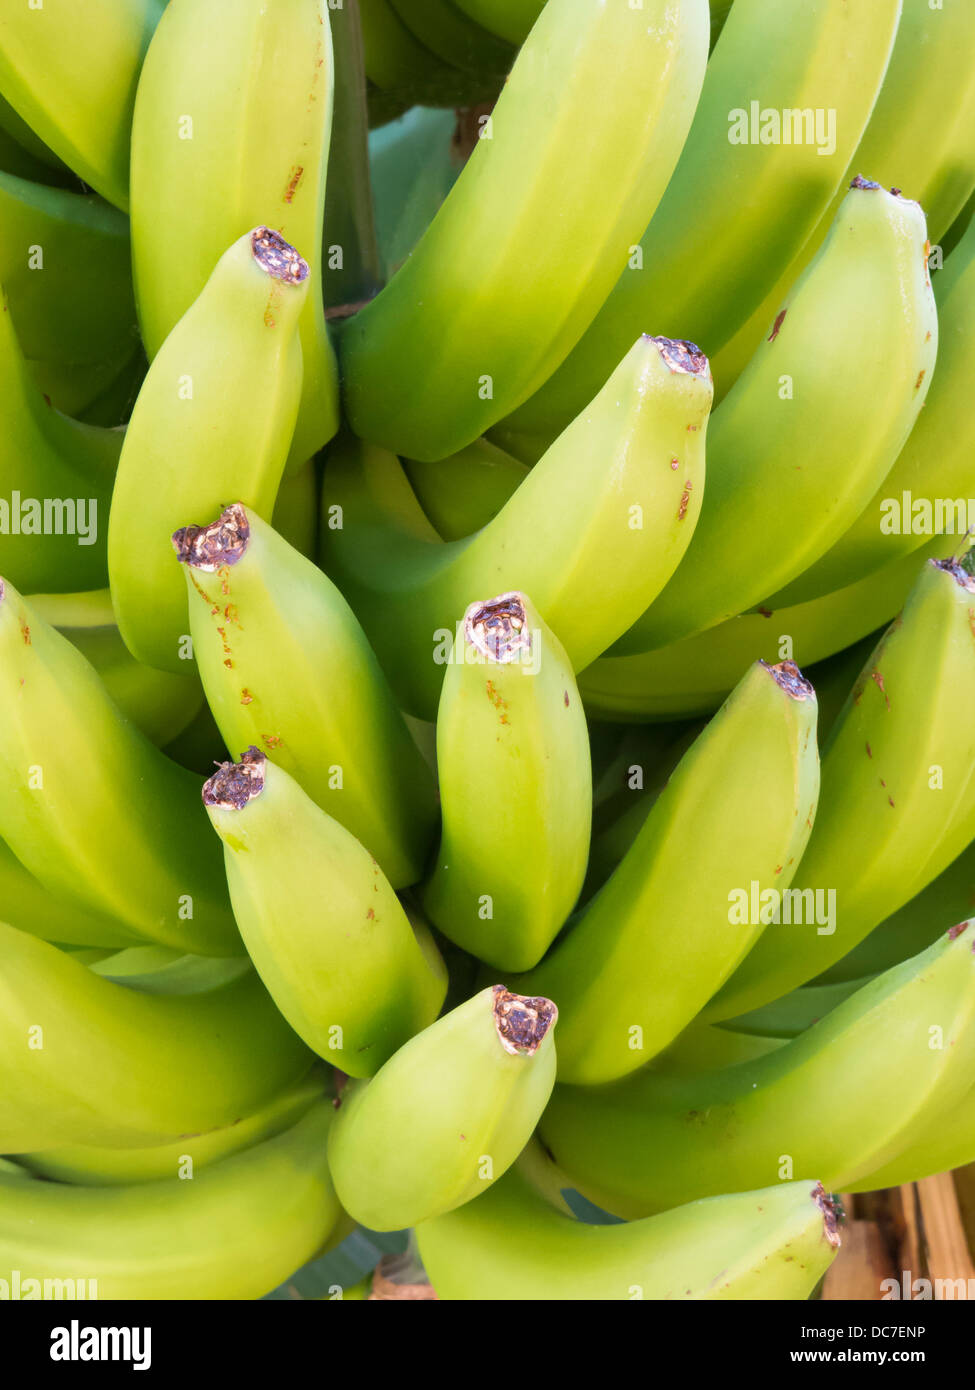 Nahaufnahme eines Bündels grüner Bananen Stockfoto